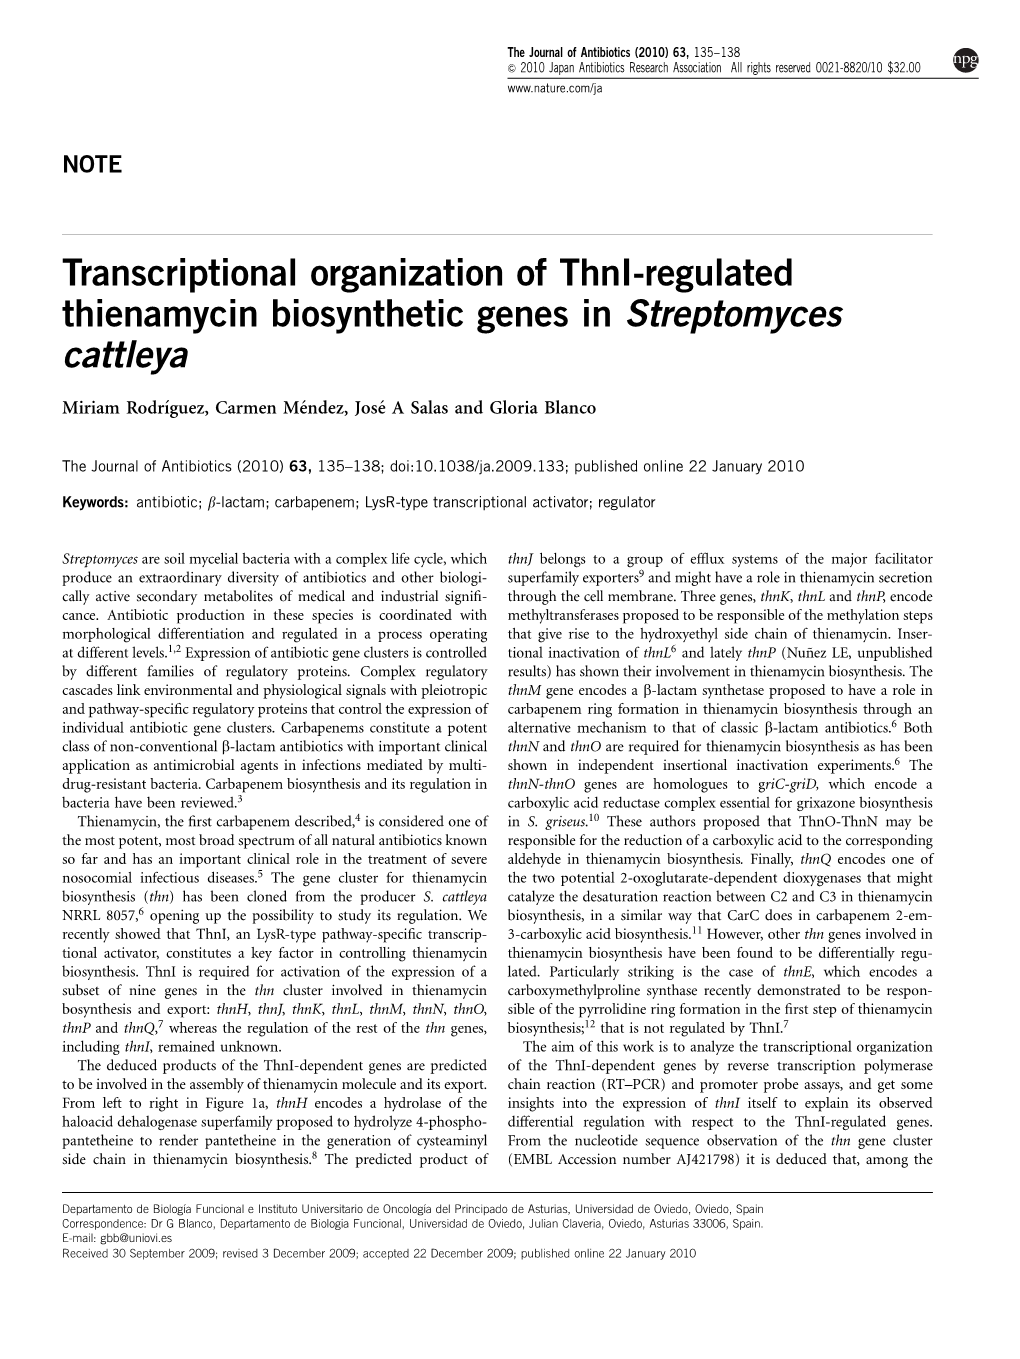 Transcriptional Organization of Thni-Regulated Thienamycin Biosynthetic Genes in Streptomyces Cattleya